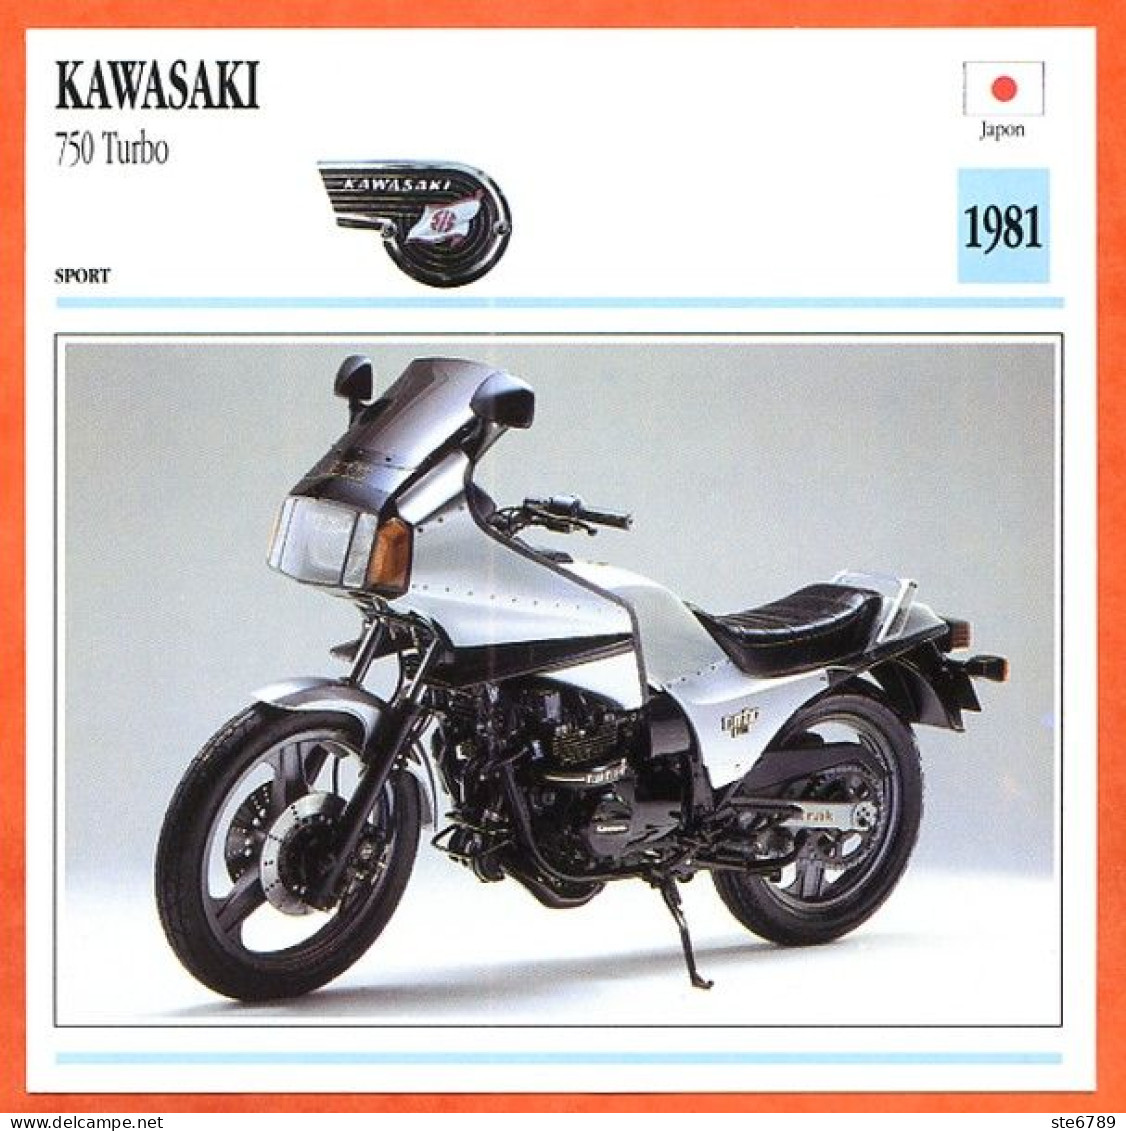 KAWASAKI 750 Turbo 1981 Japon Fiche Technique Moto - Sports